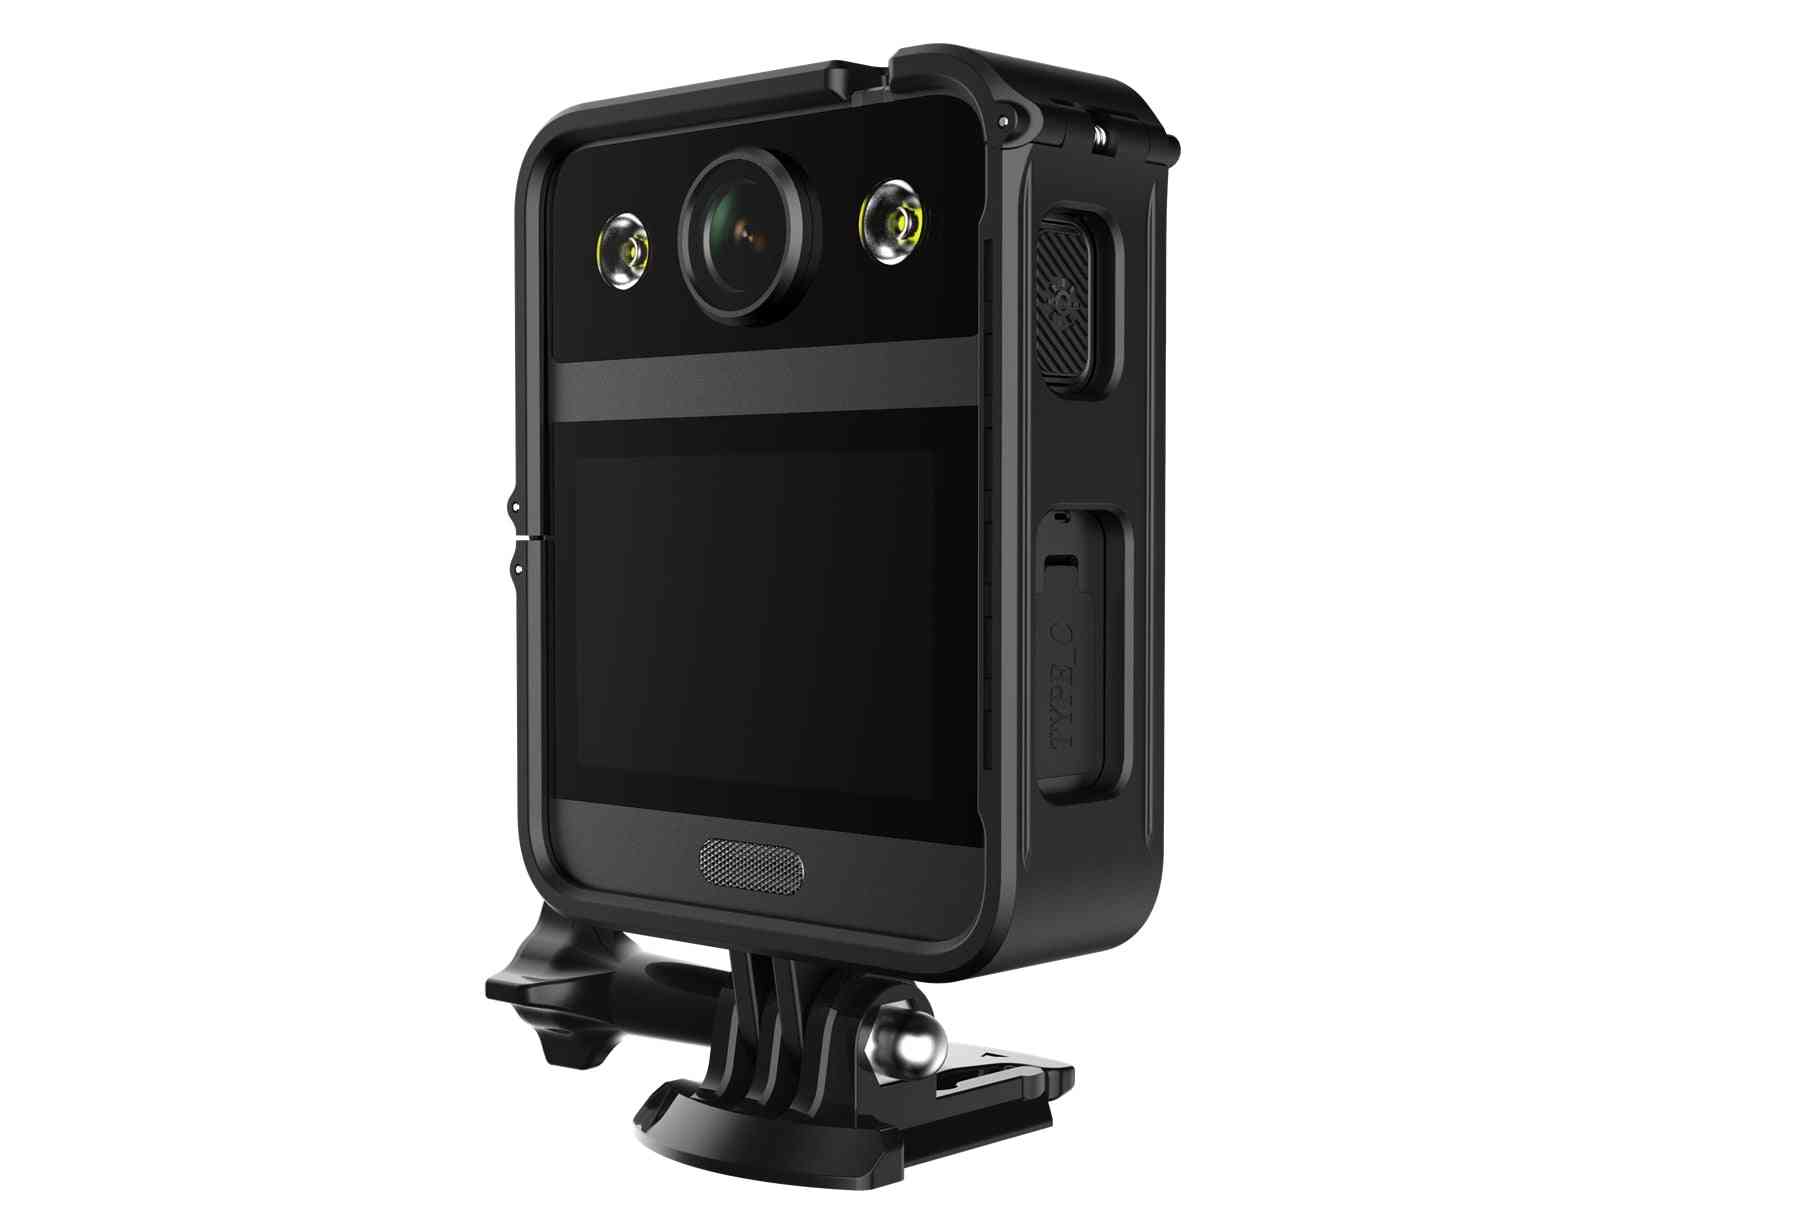 Caméra corporelle portable sjcam a20 10m vue nocturne gyroscope écran tactile police portable anti-terrorisme application de la loi dv mini caméscope